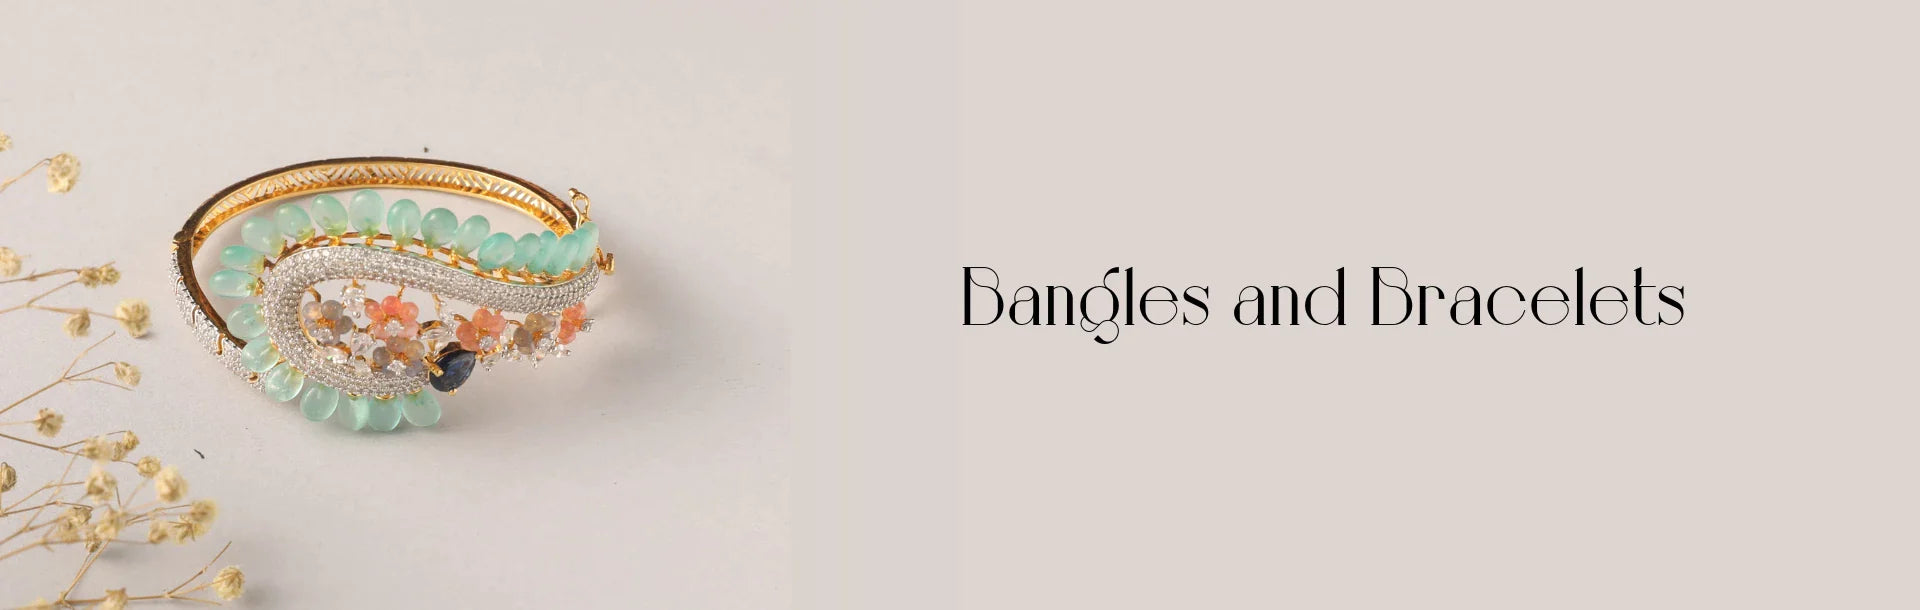 Silver Bangles And Bracelets